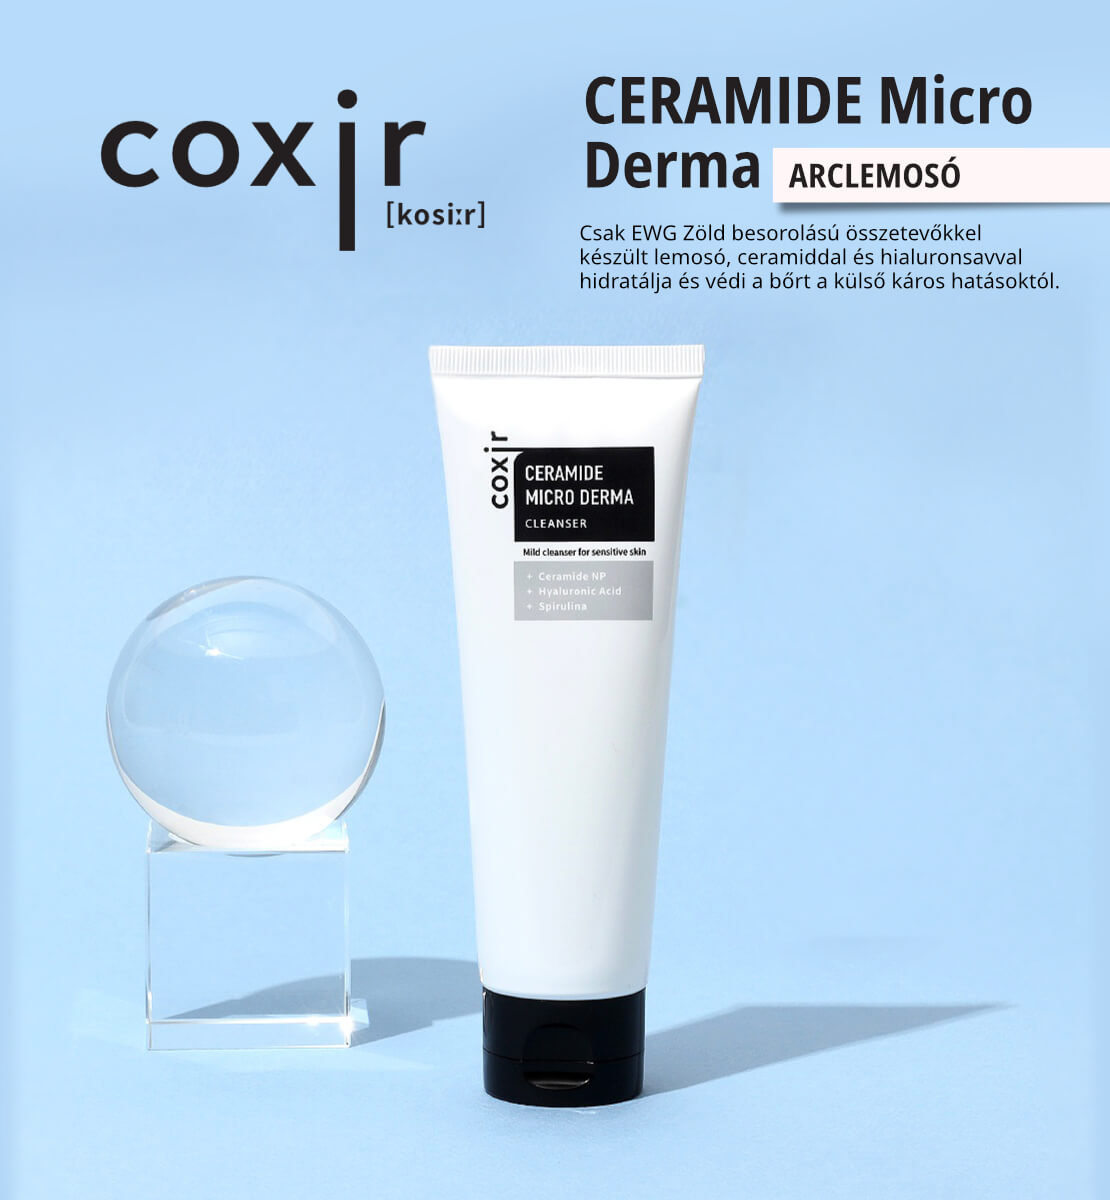 Coxir-Ceramide-Micro-Derma-arclemoso-leiras